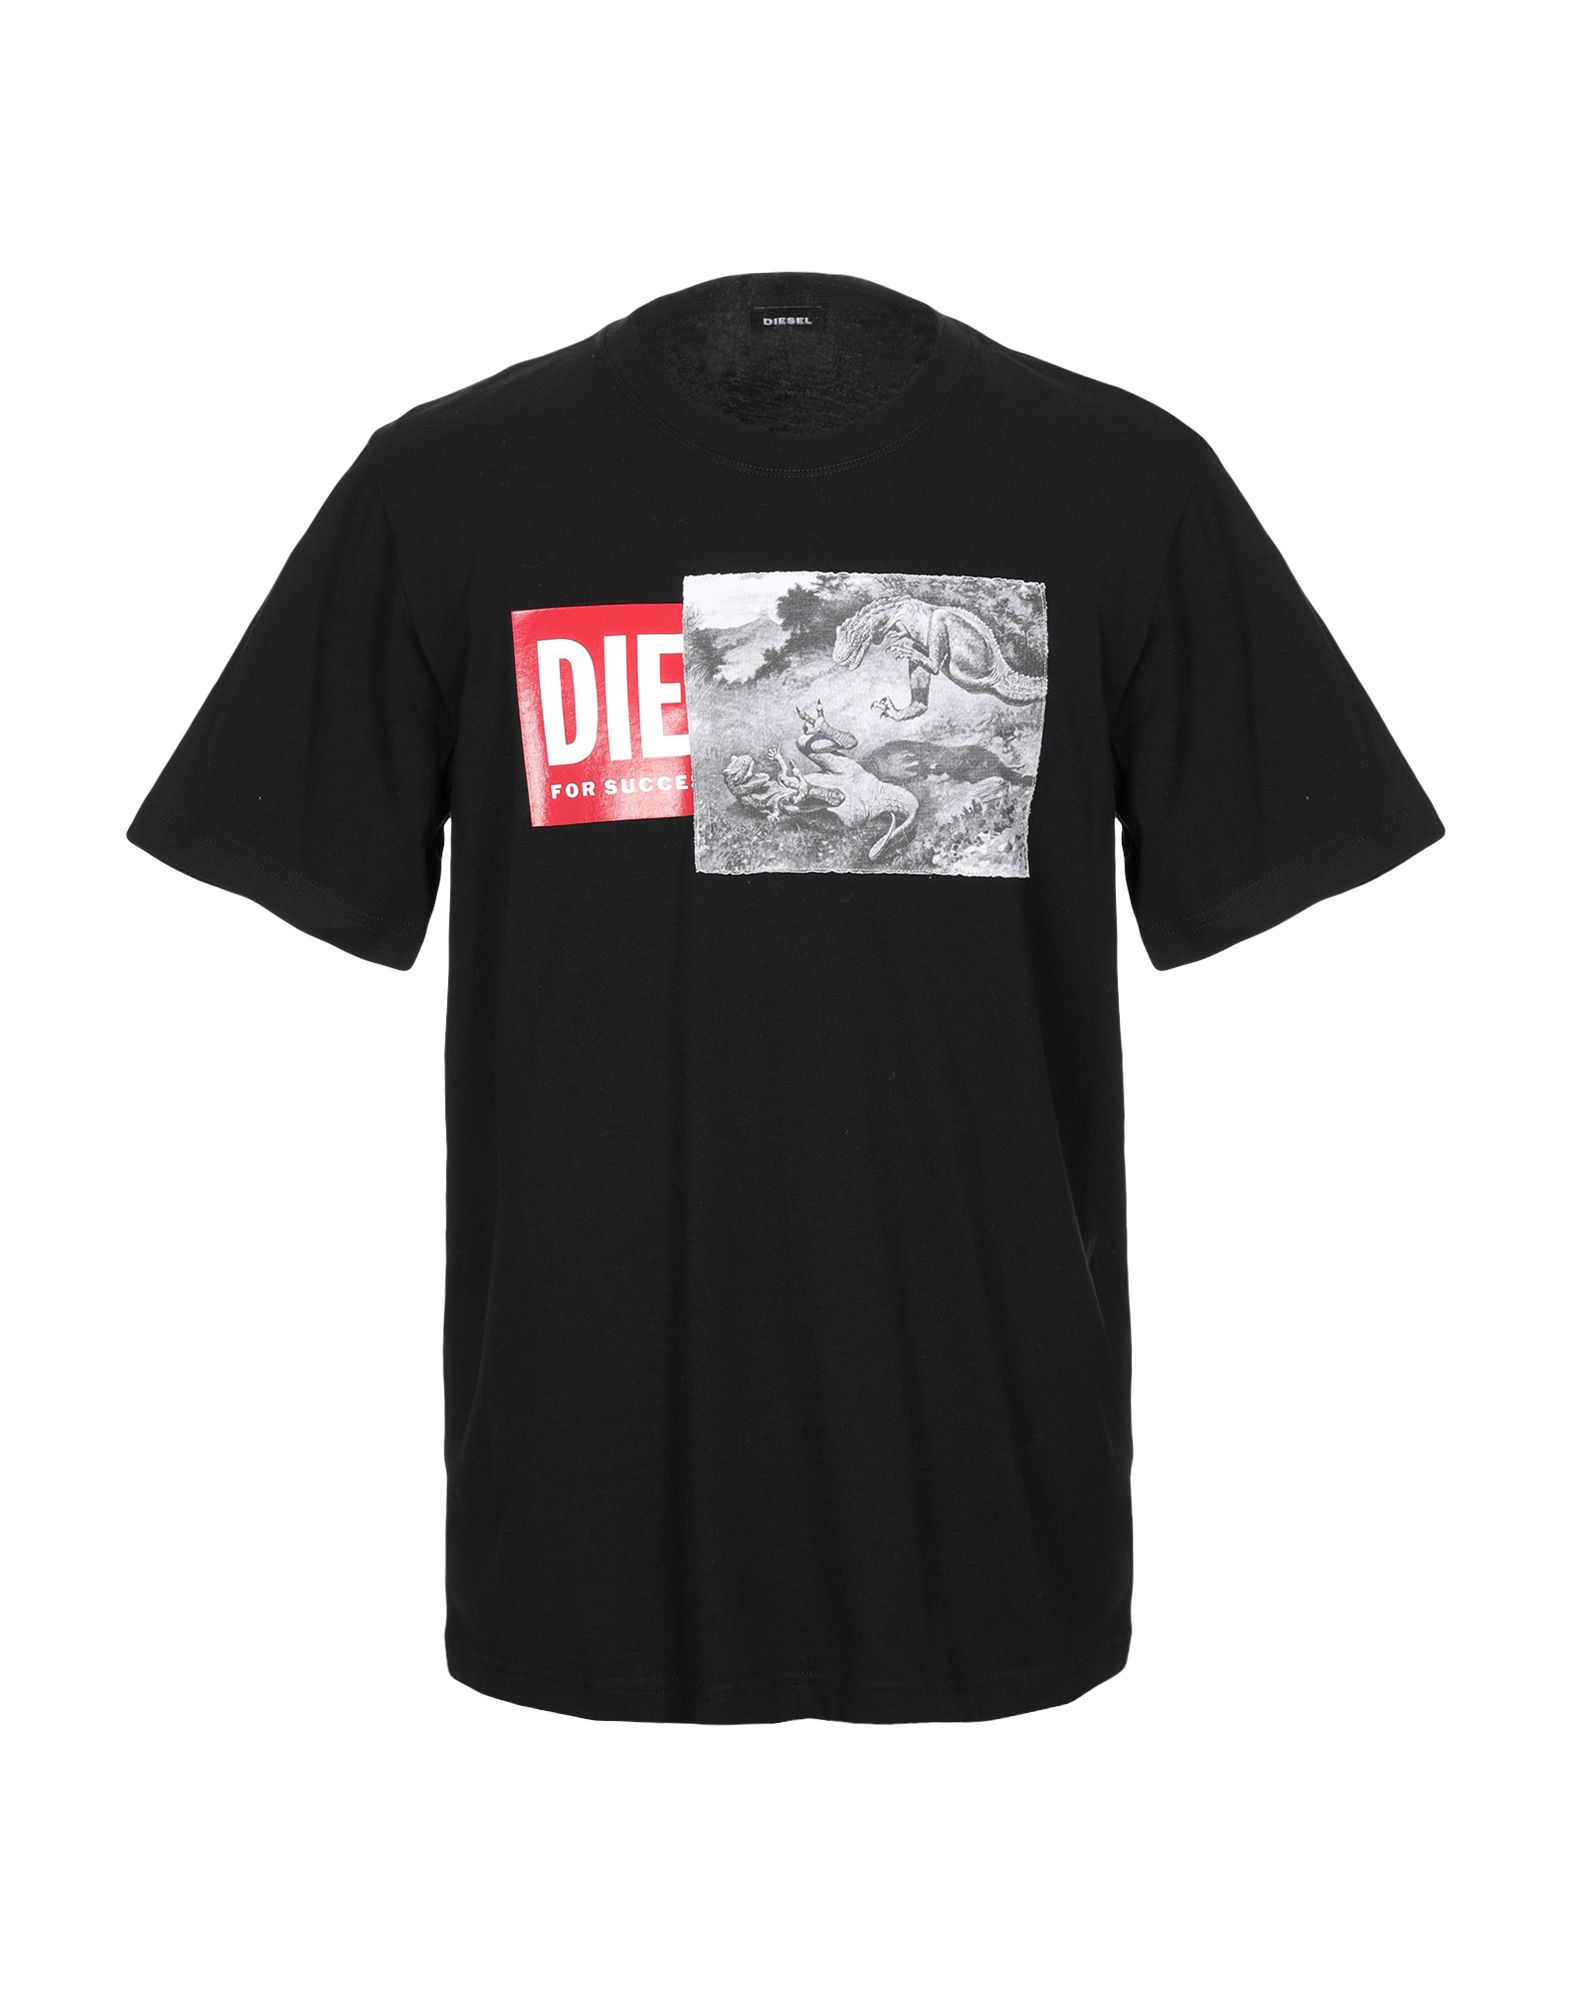 DIESEL T-shirts - Item 12290286